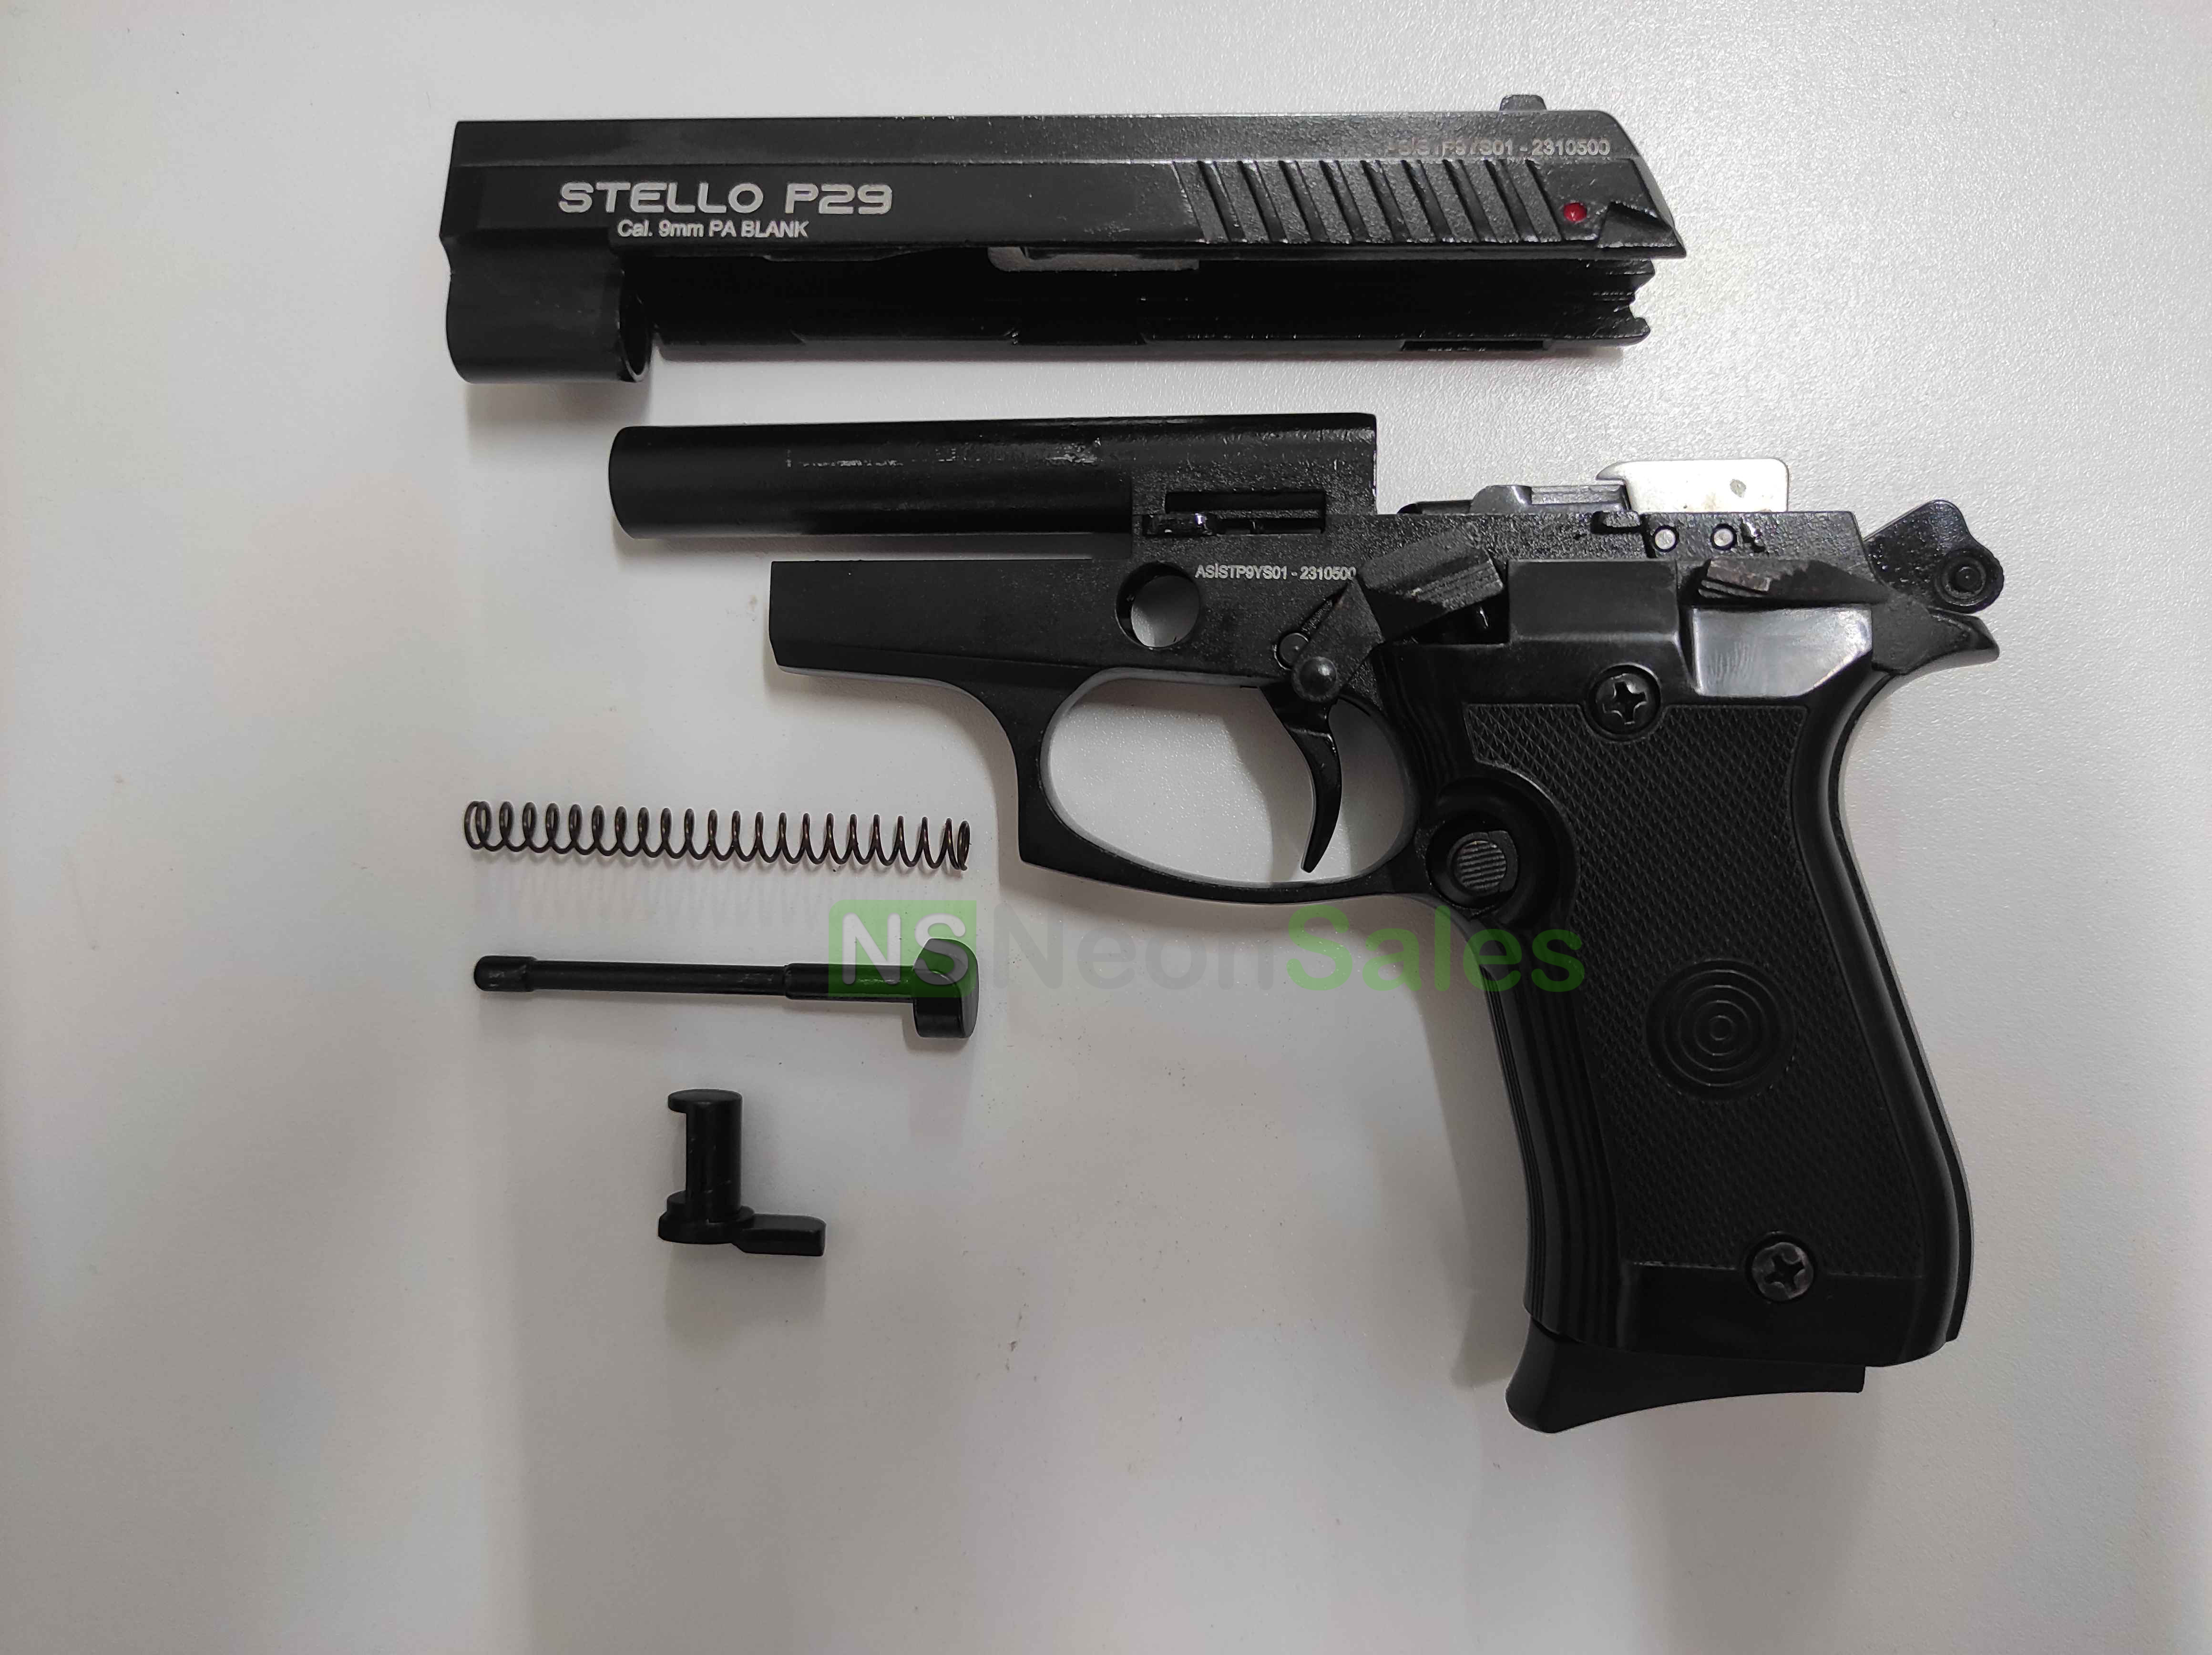 STELLO P29 BLANK GUN +10 BLANKS +HOLSTER + TEARGAS